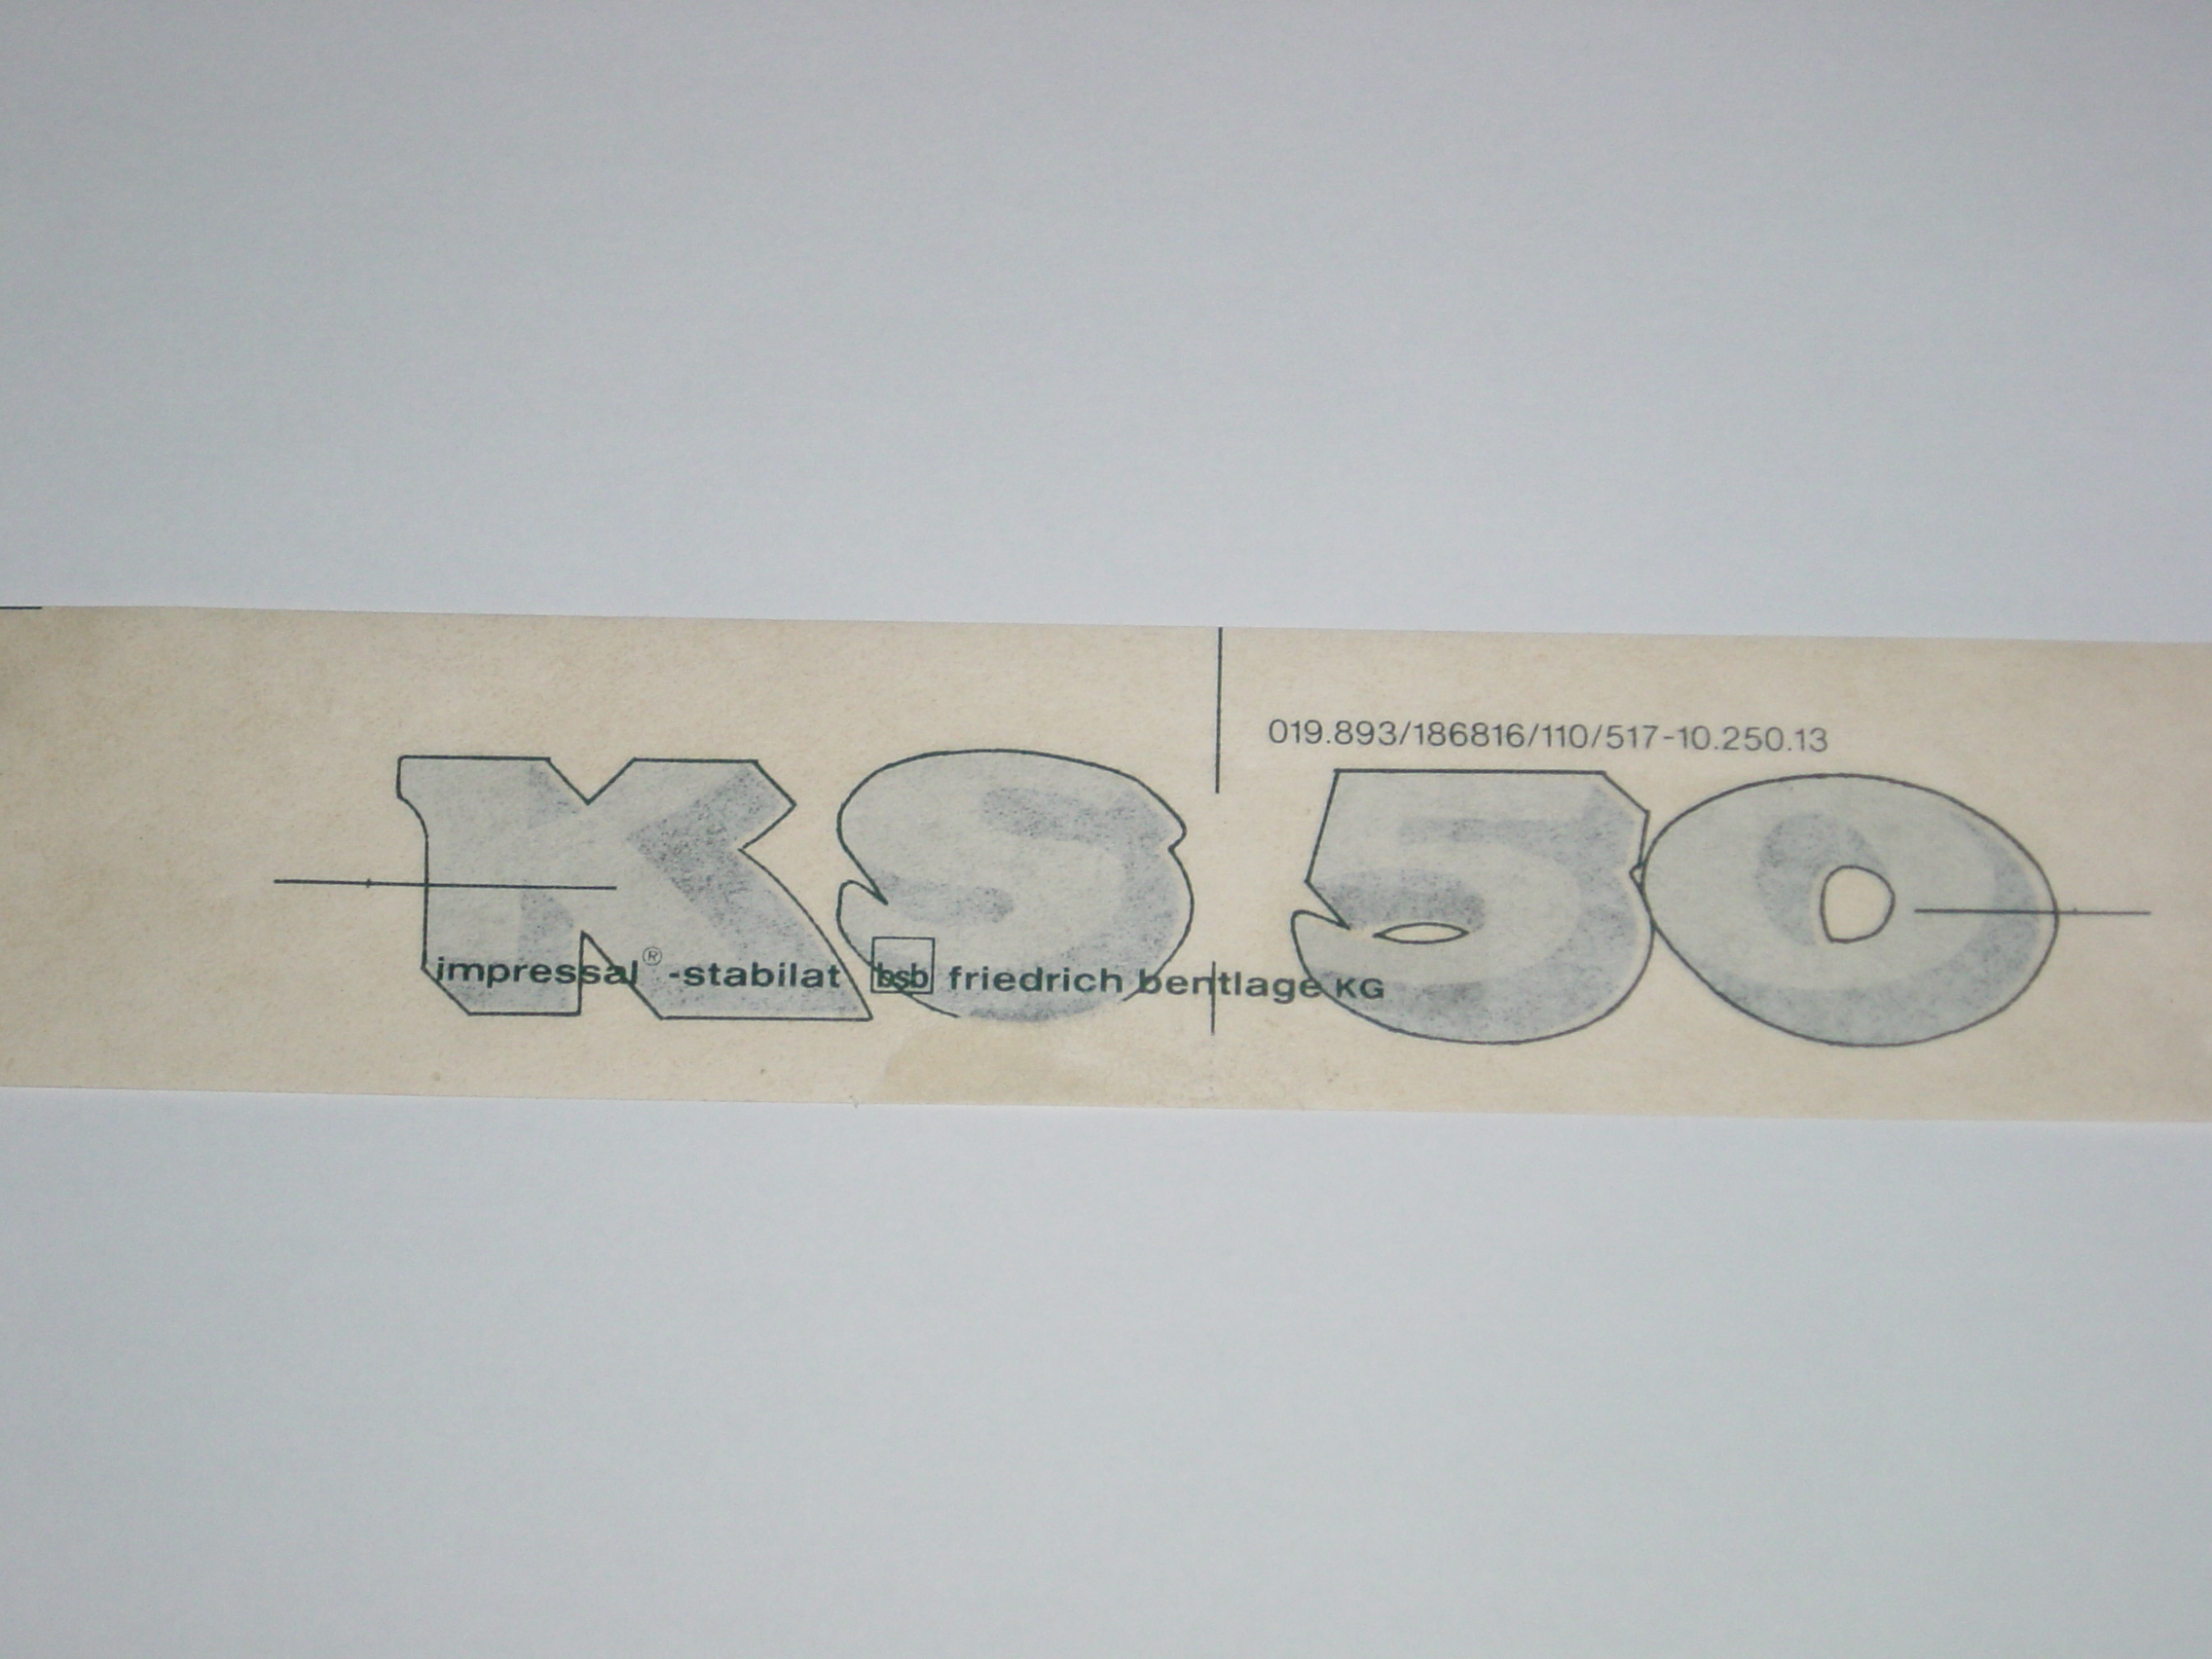 Sticker " KS 50 "